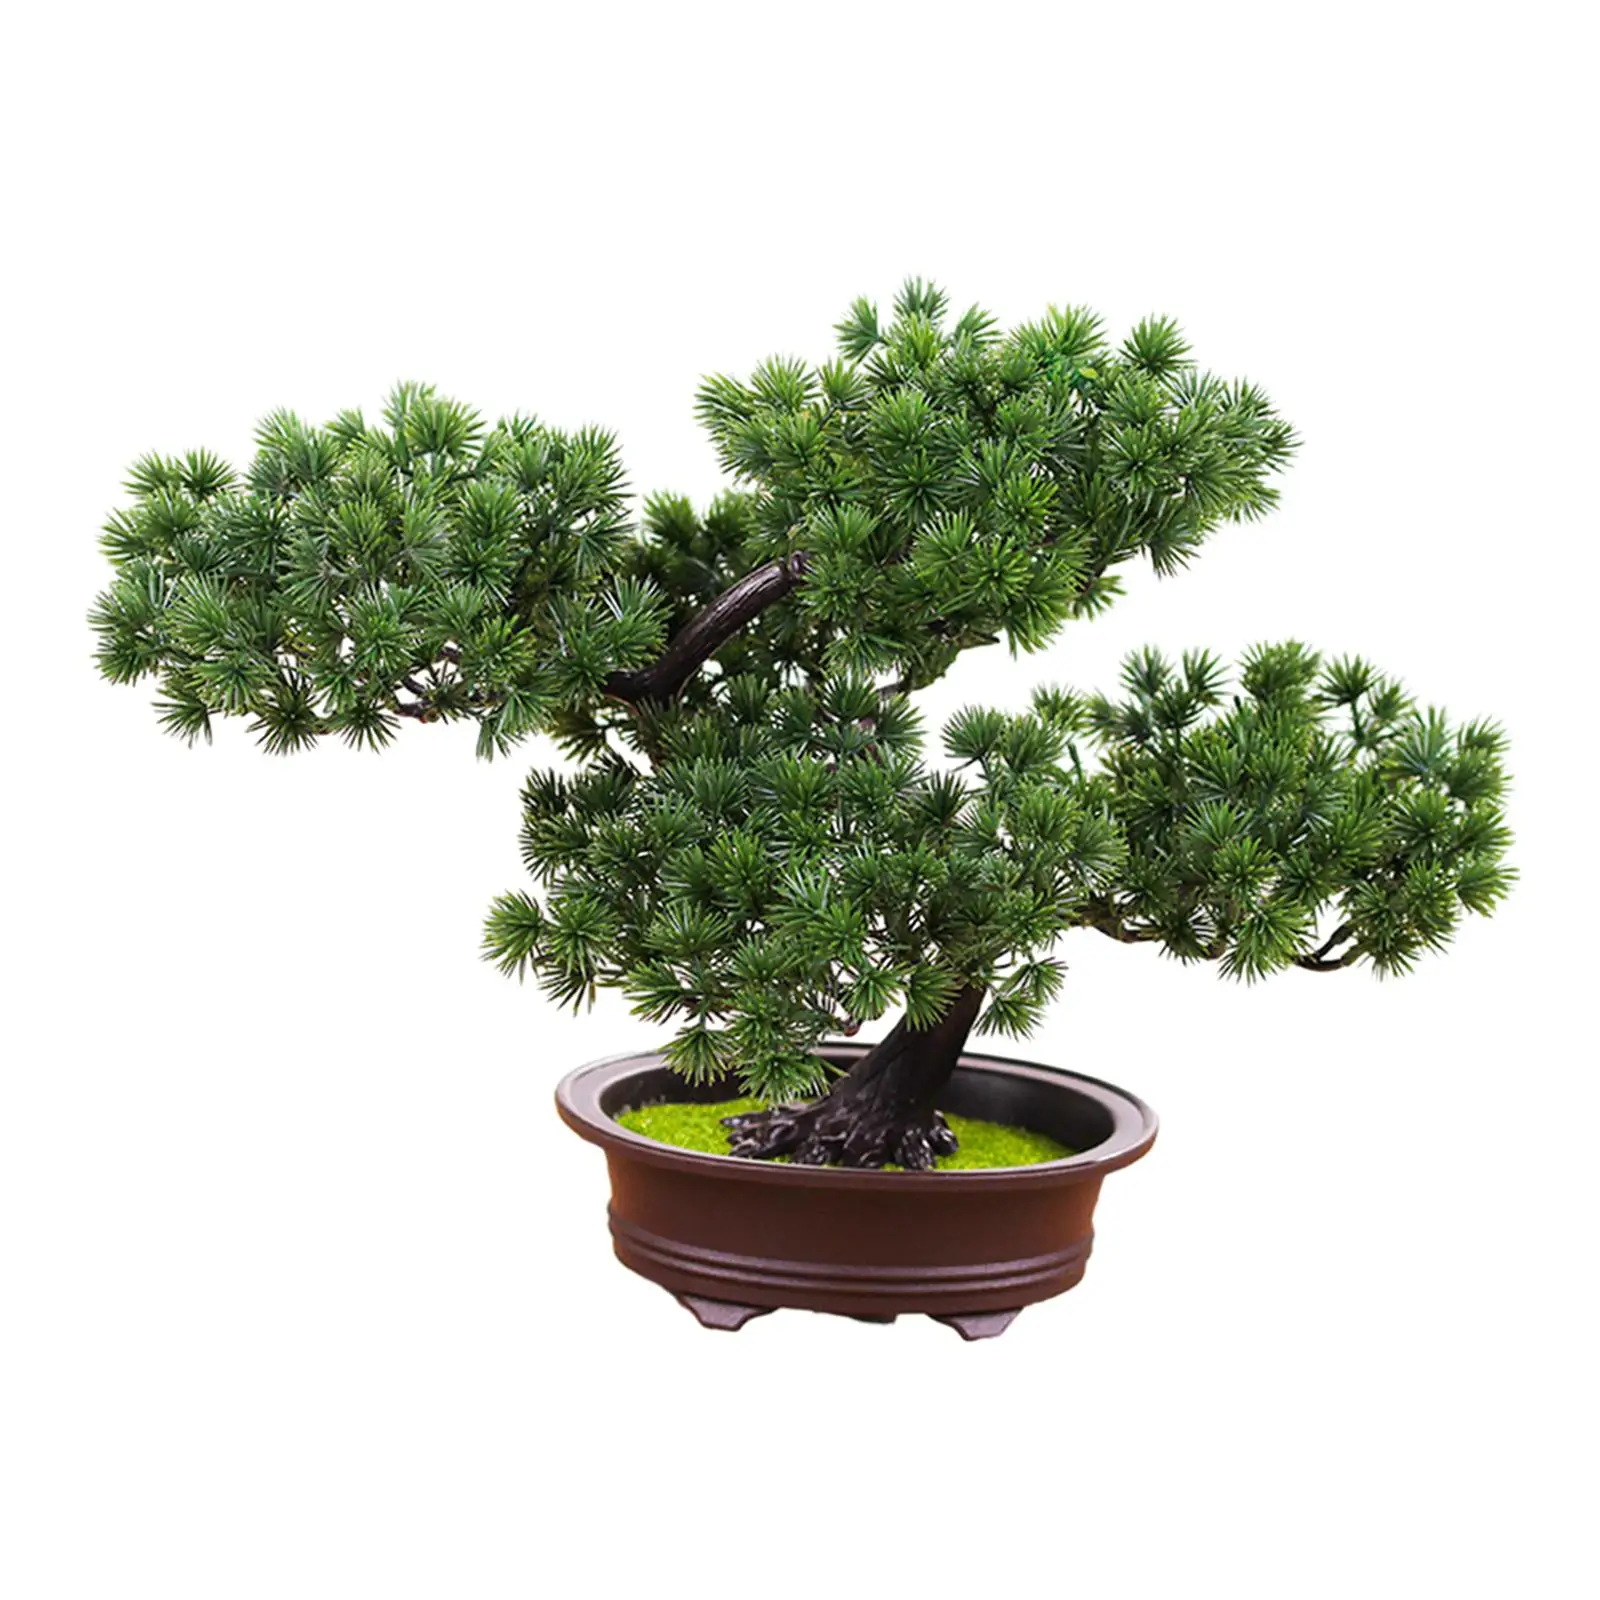 Artificial Bonsai Decor Pine Tree House Plants Desk Ornament for Home Garden